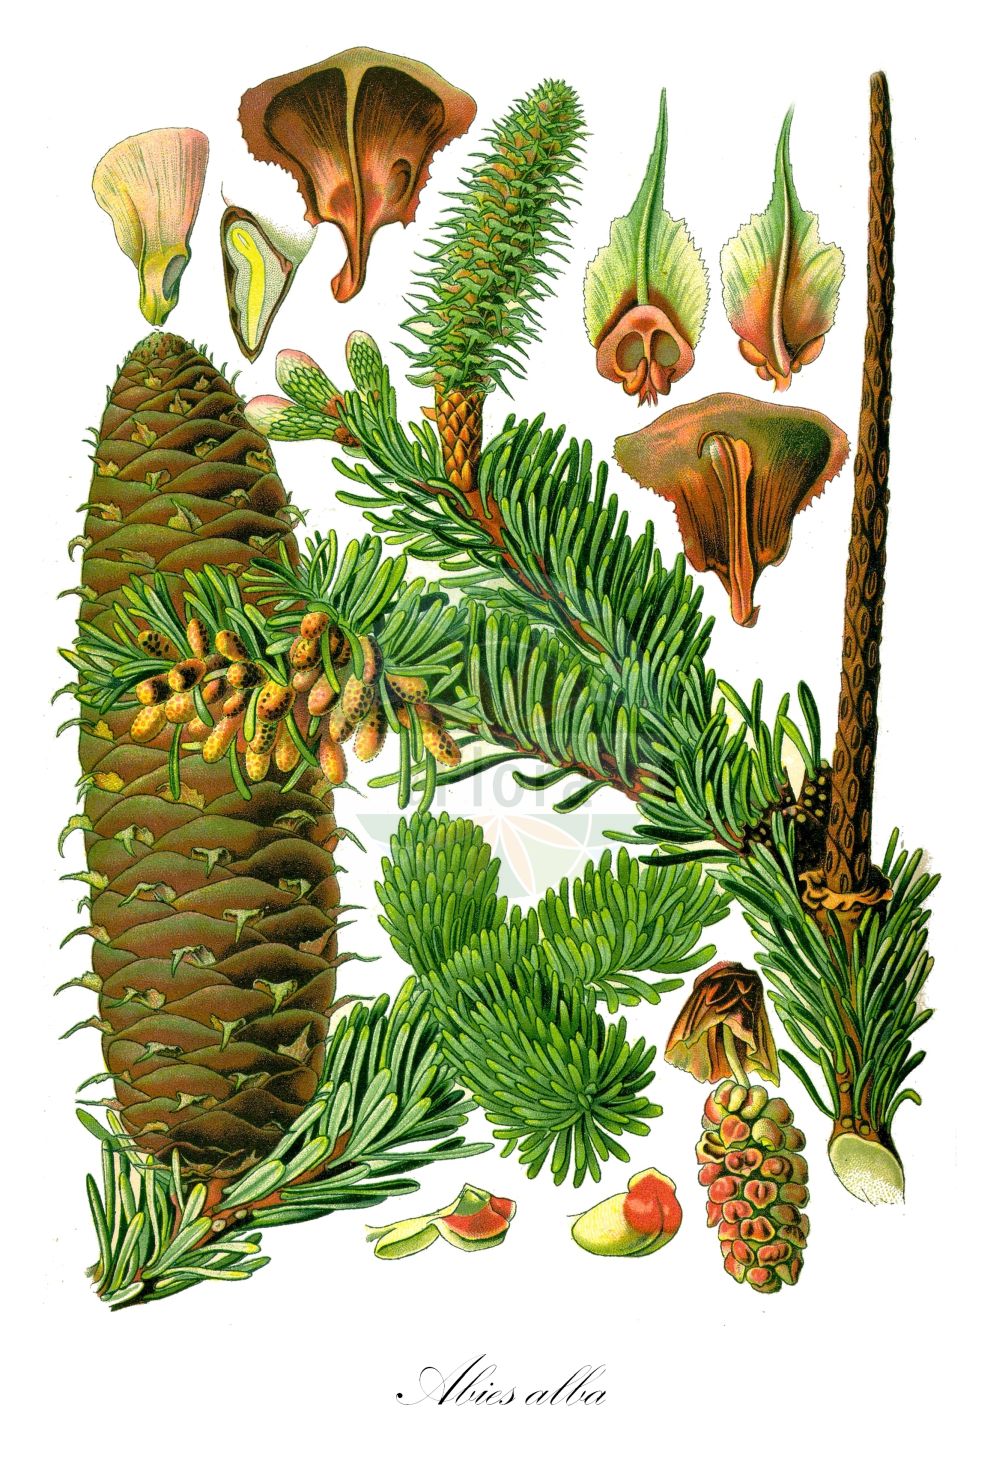 Historische Abbildung von Abies alba (Weiß-Tanne - European Silver-fir). ---- Historical Drawing of Abies alba (Weiß-Tanne - European Silver-fir).(Abies alba,Weiß-Tanne,European Silver-fir,Abies alba,Abies nobilis,Abies pardei,Abies pectinata,Pinus pectinata,Pinus picea,Weiss-Tanne,Edel-Tanne,European Silver-fir,Common Fir,Silver Fir,Swiss Pine,Abies,Tanne,Fir,Pinaceae,Kieferngewächse,Pine family,Thomé (1885))